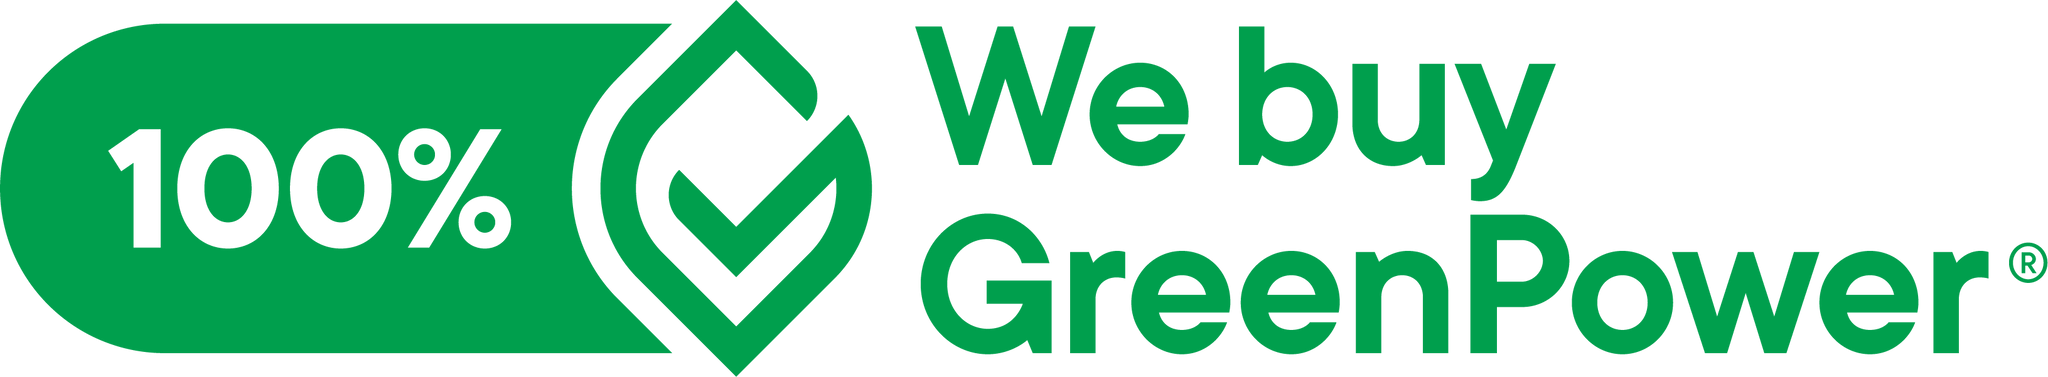 We buy GreenPower 100